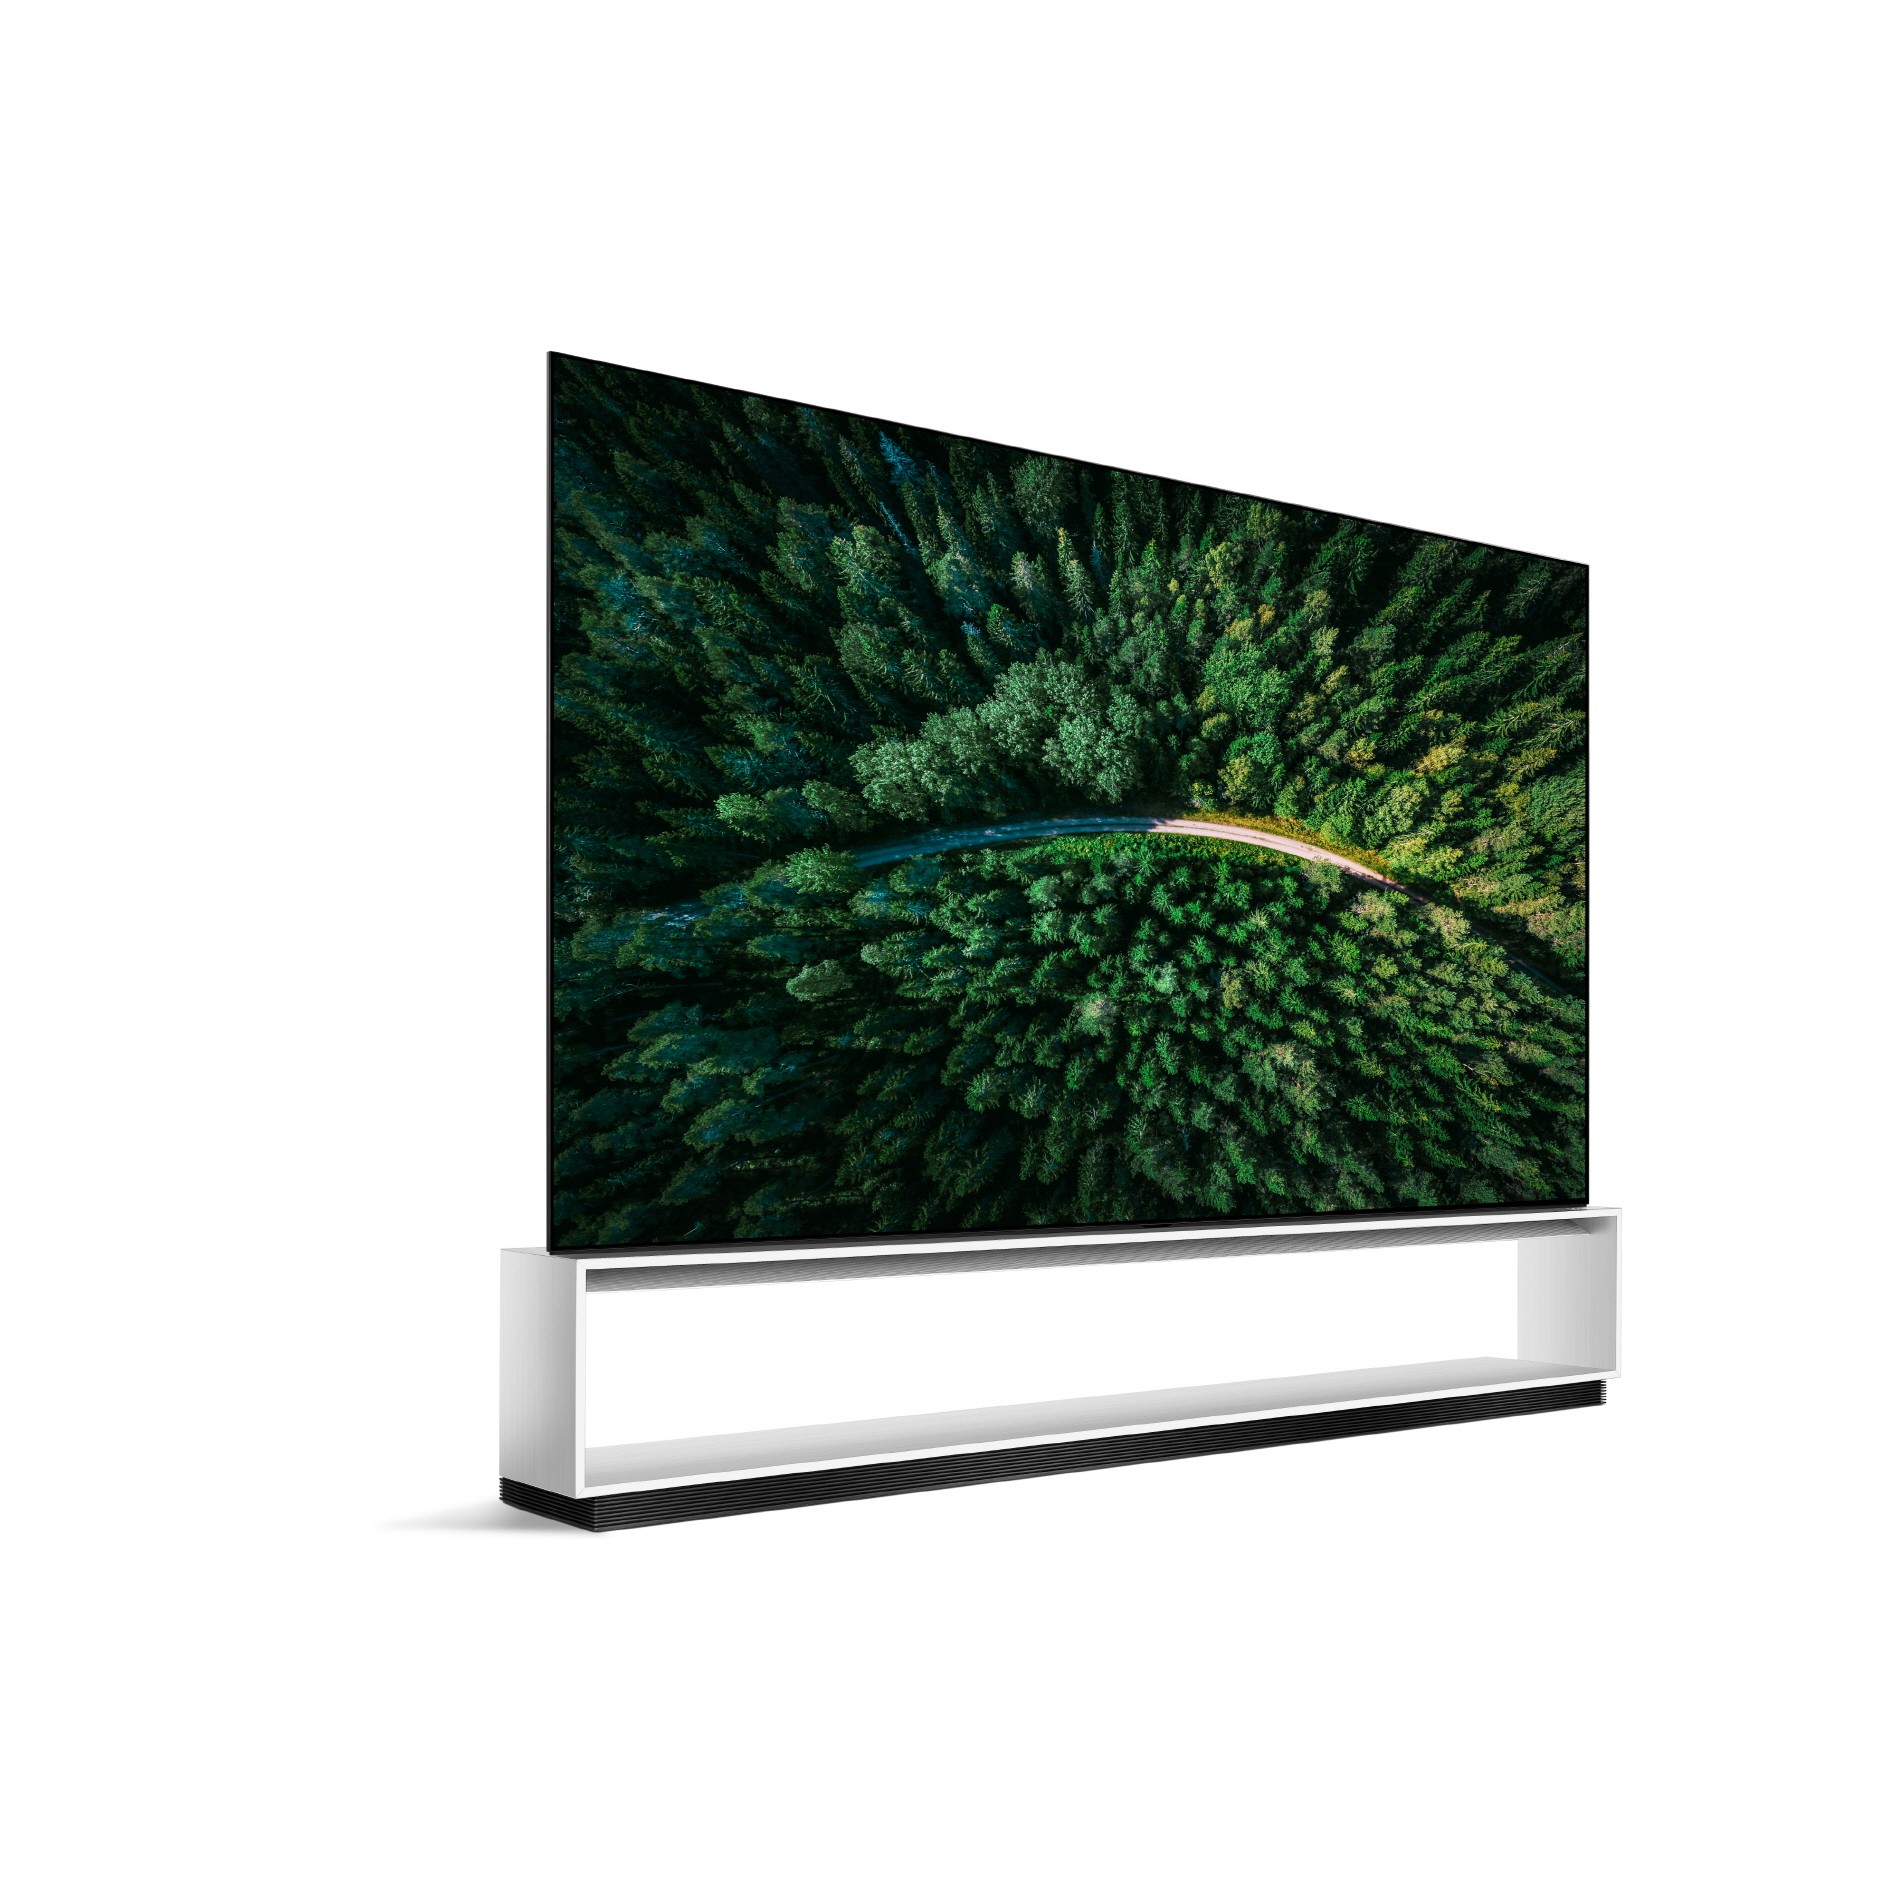 A left-side view of LG SIGNATURE OLED 8K TV model 88Z9